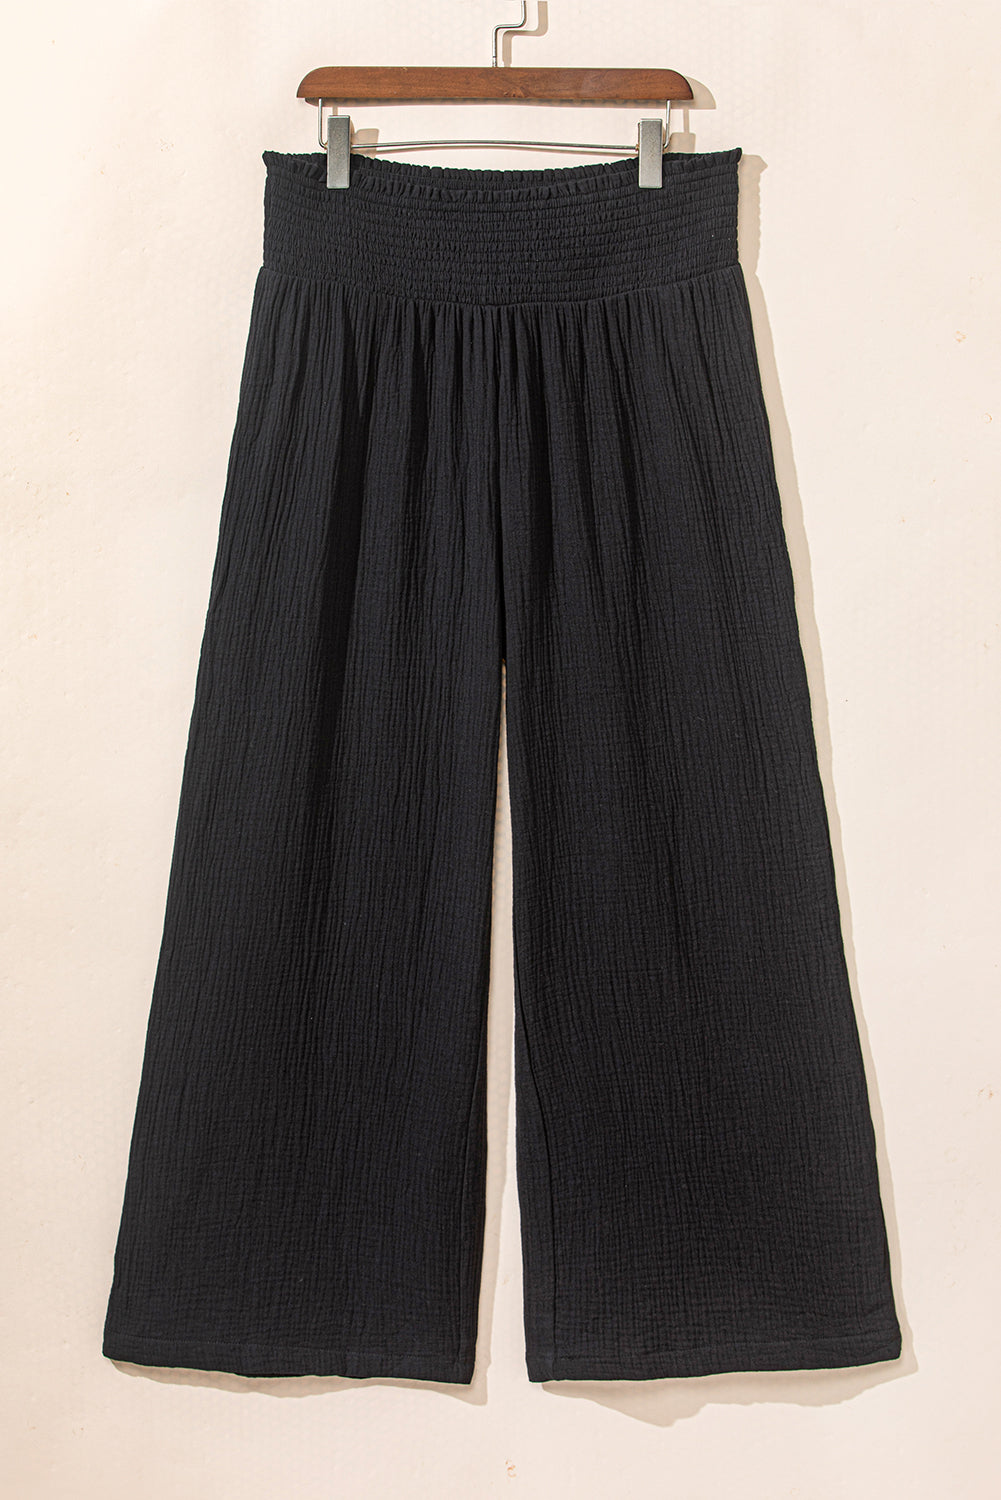 Black Textured High Waist Wide Leg Plus Size Pants